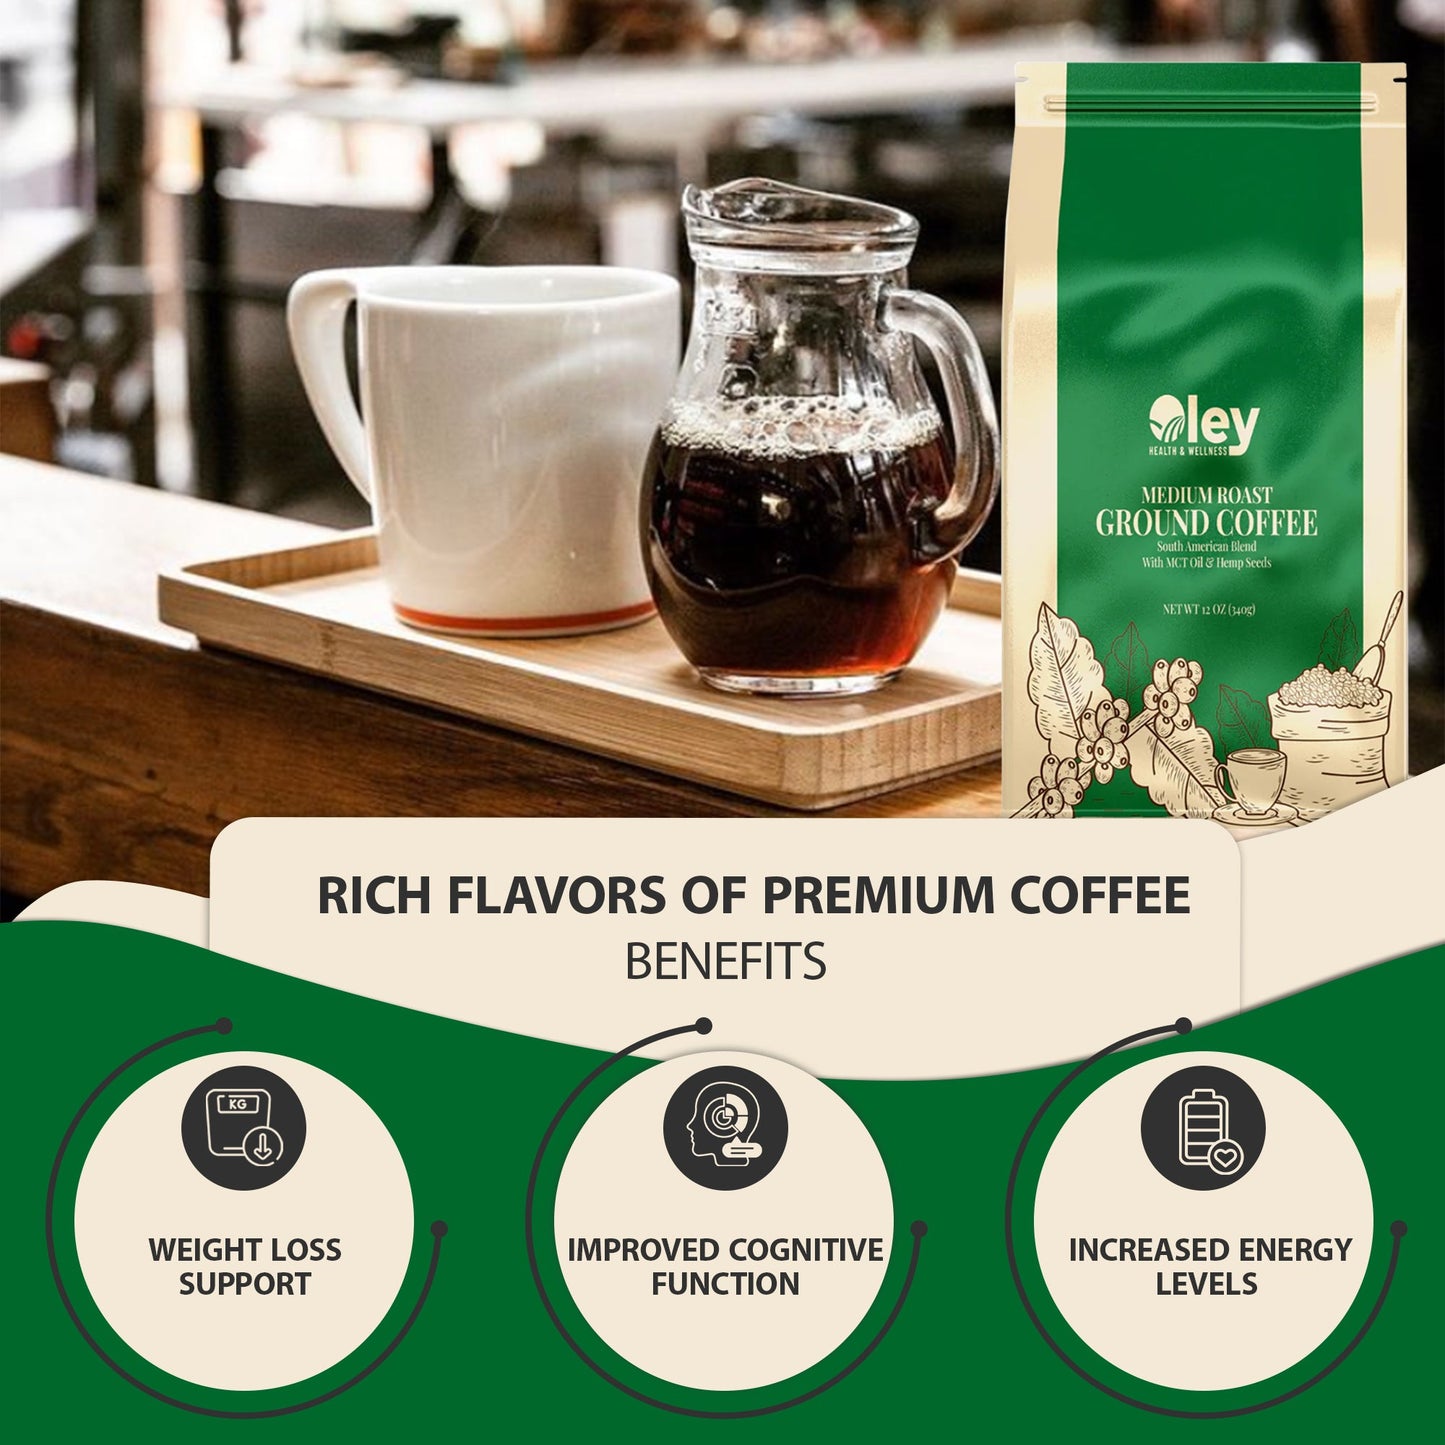 Keto-Friendly Coffee - Medium Roast Ground Coffee with MCT Oil and Hemp Seeds - Oley Health and Wellness